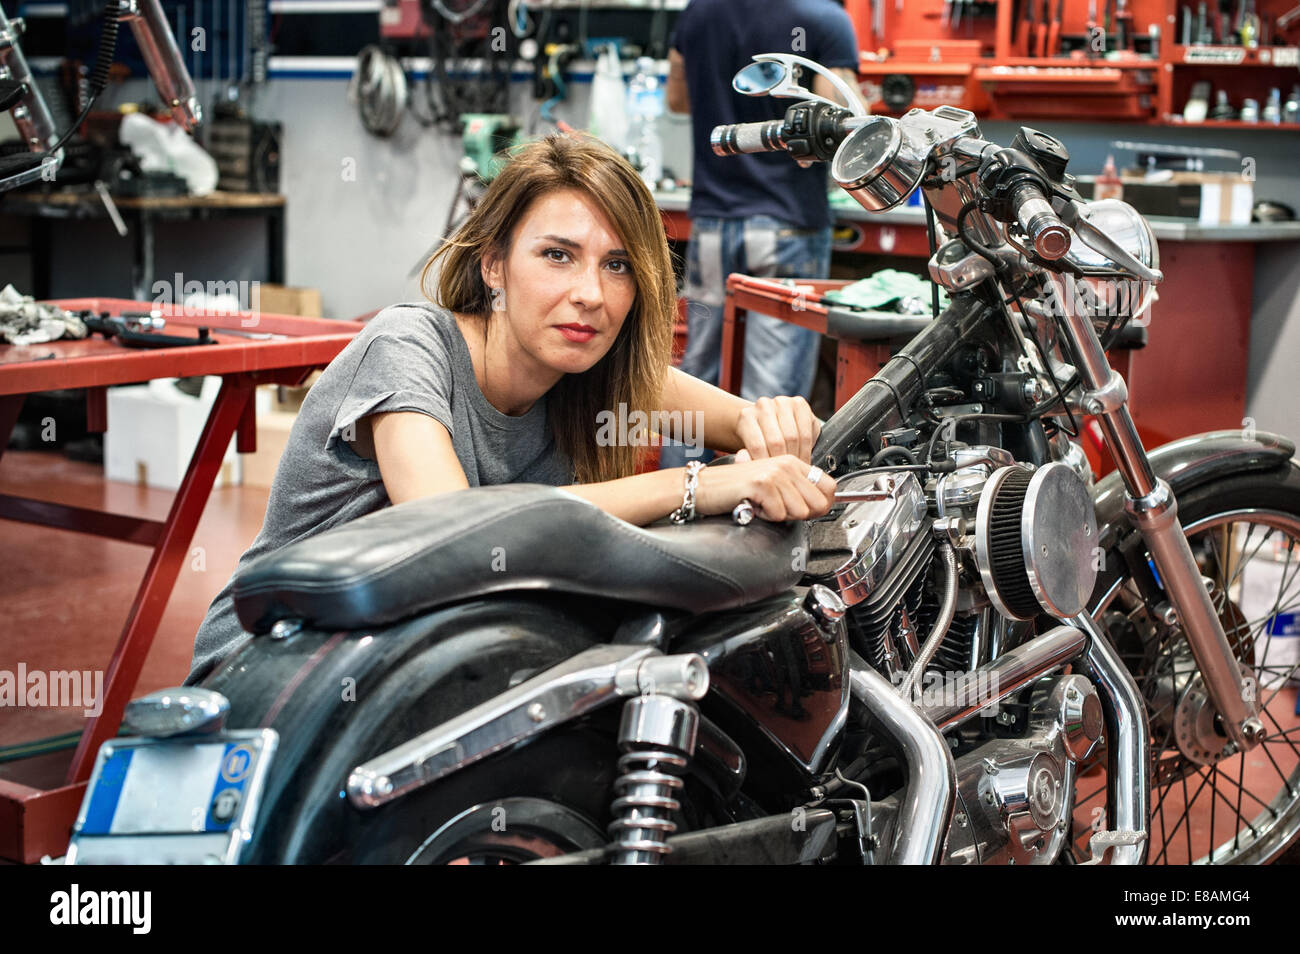 Portrait of female mechanic in motorcycle workshop Stock Photo